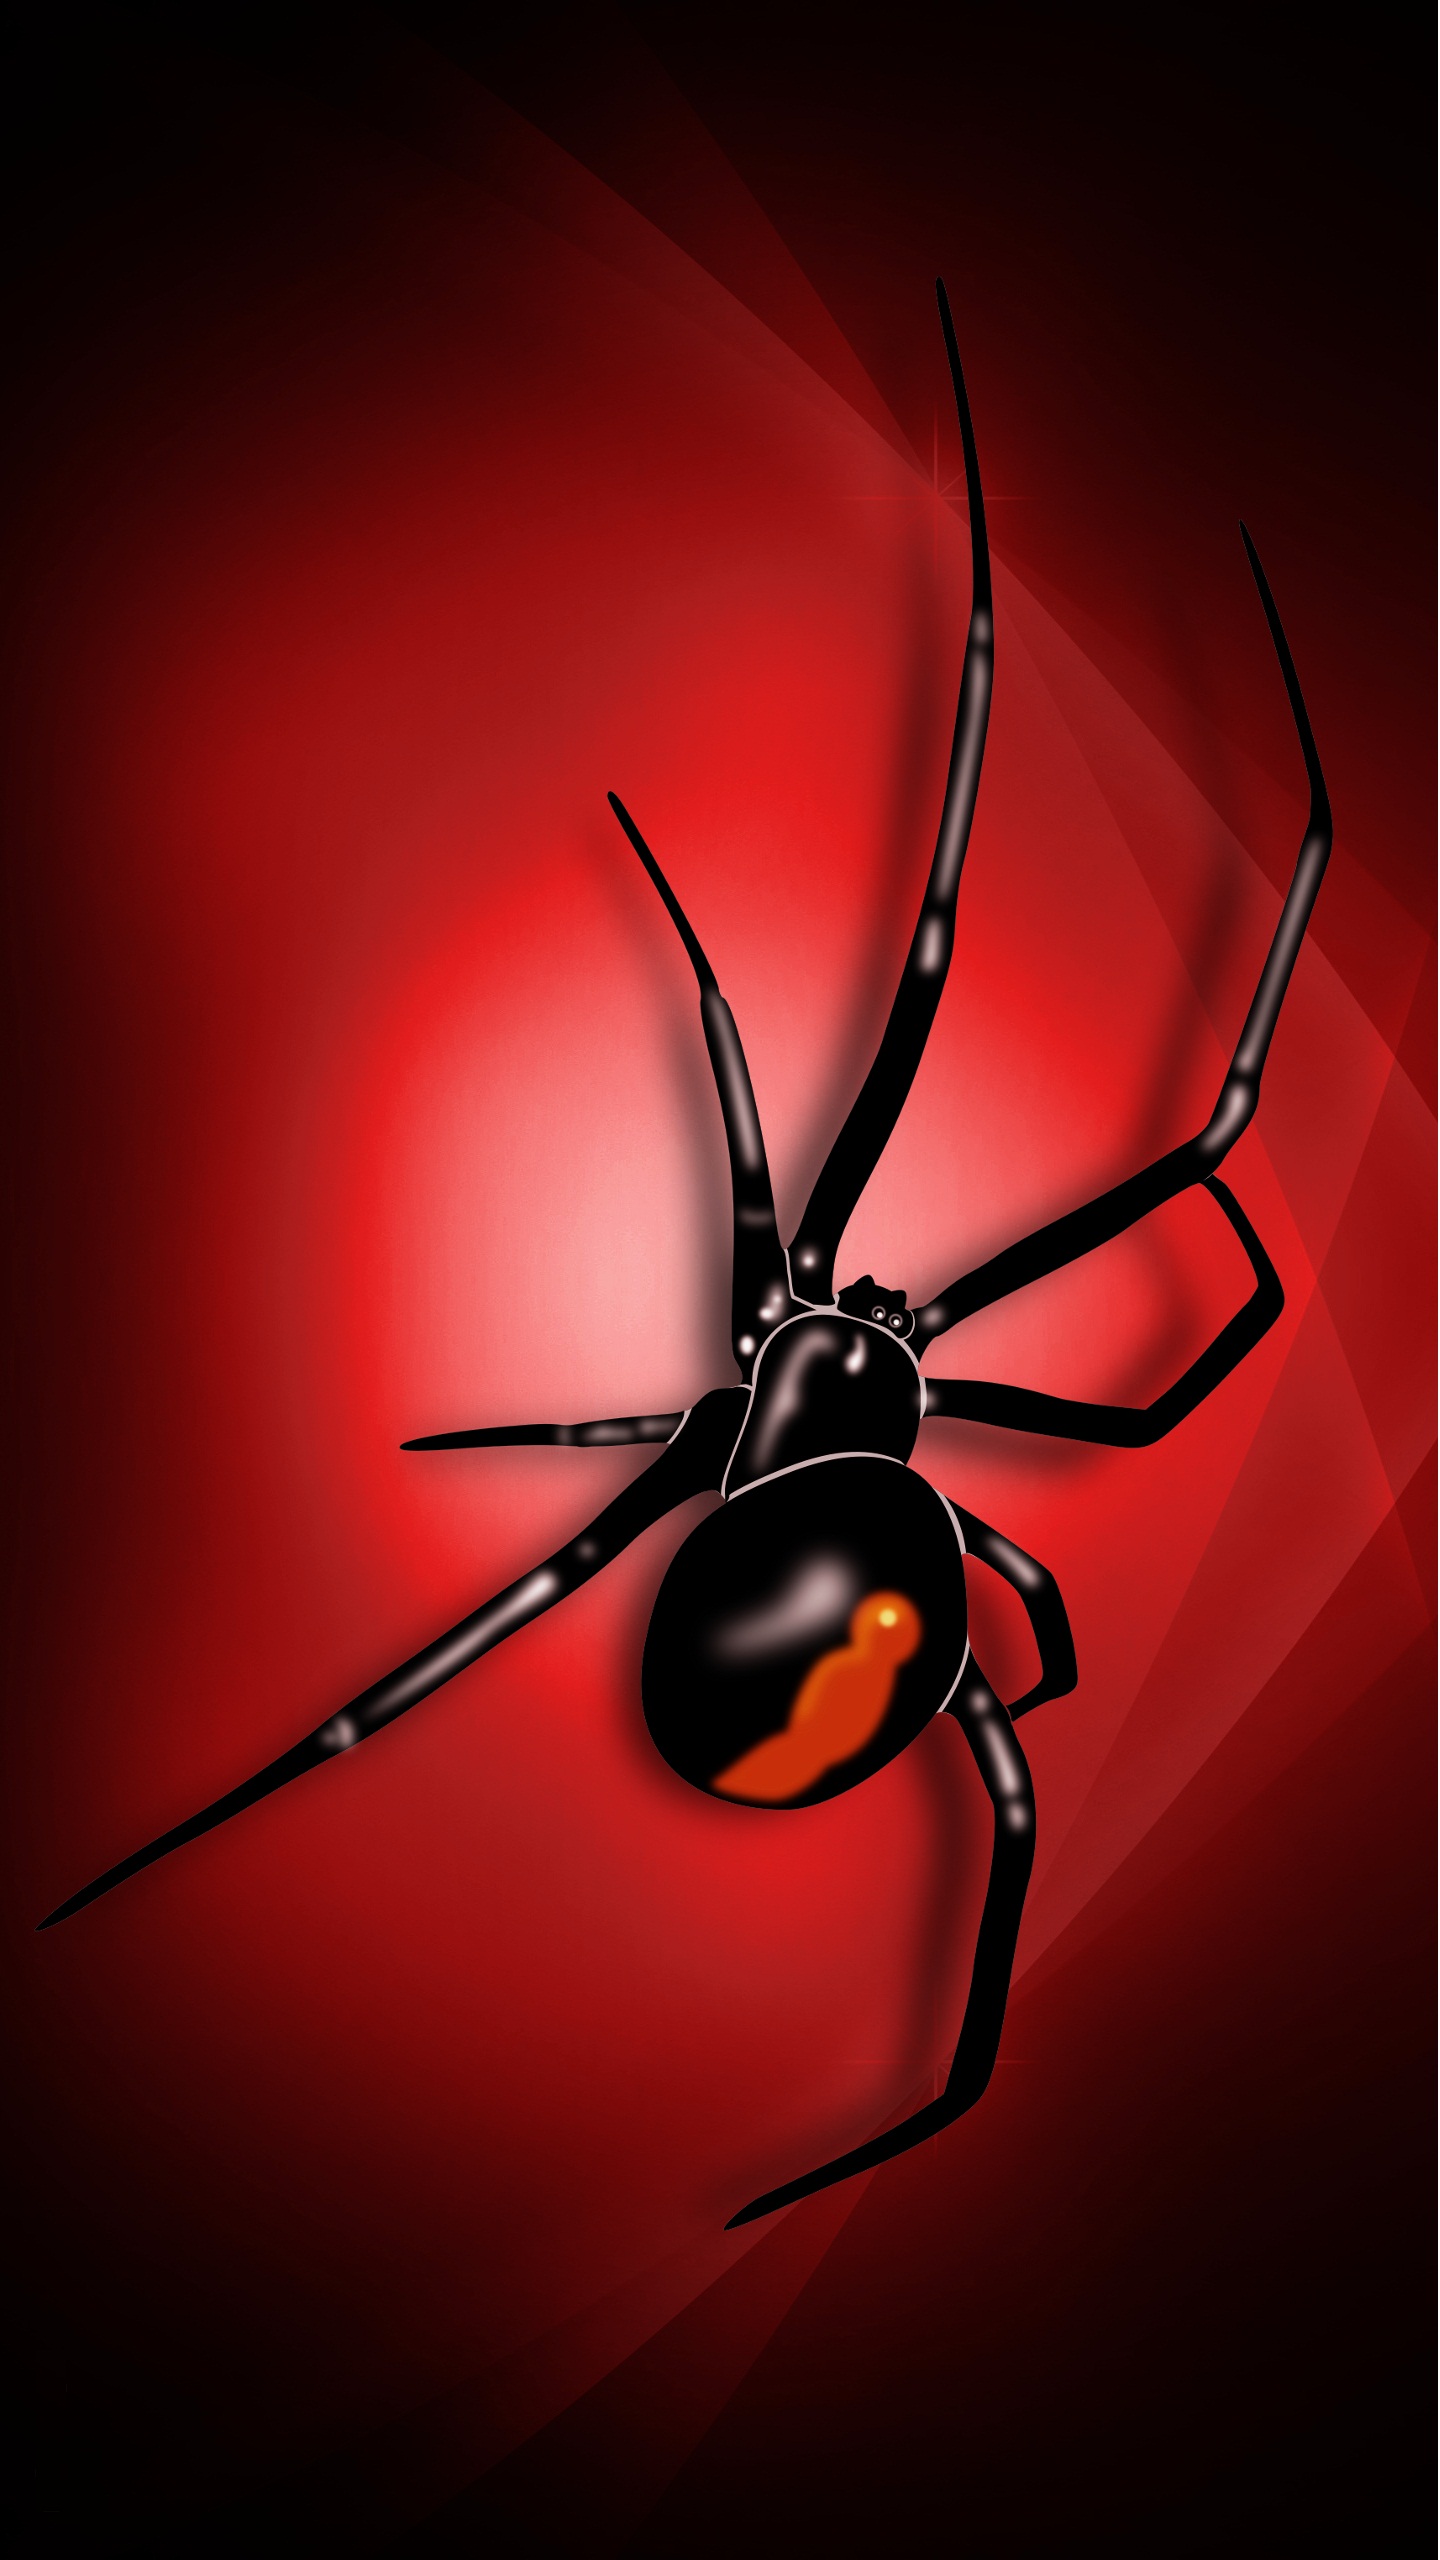 3D Spider Wallpaper iPhone 8 resolution 1440x2560